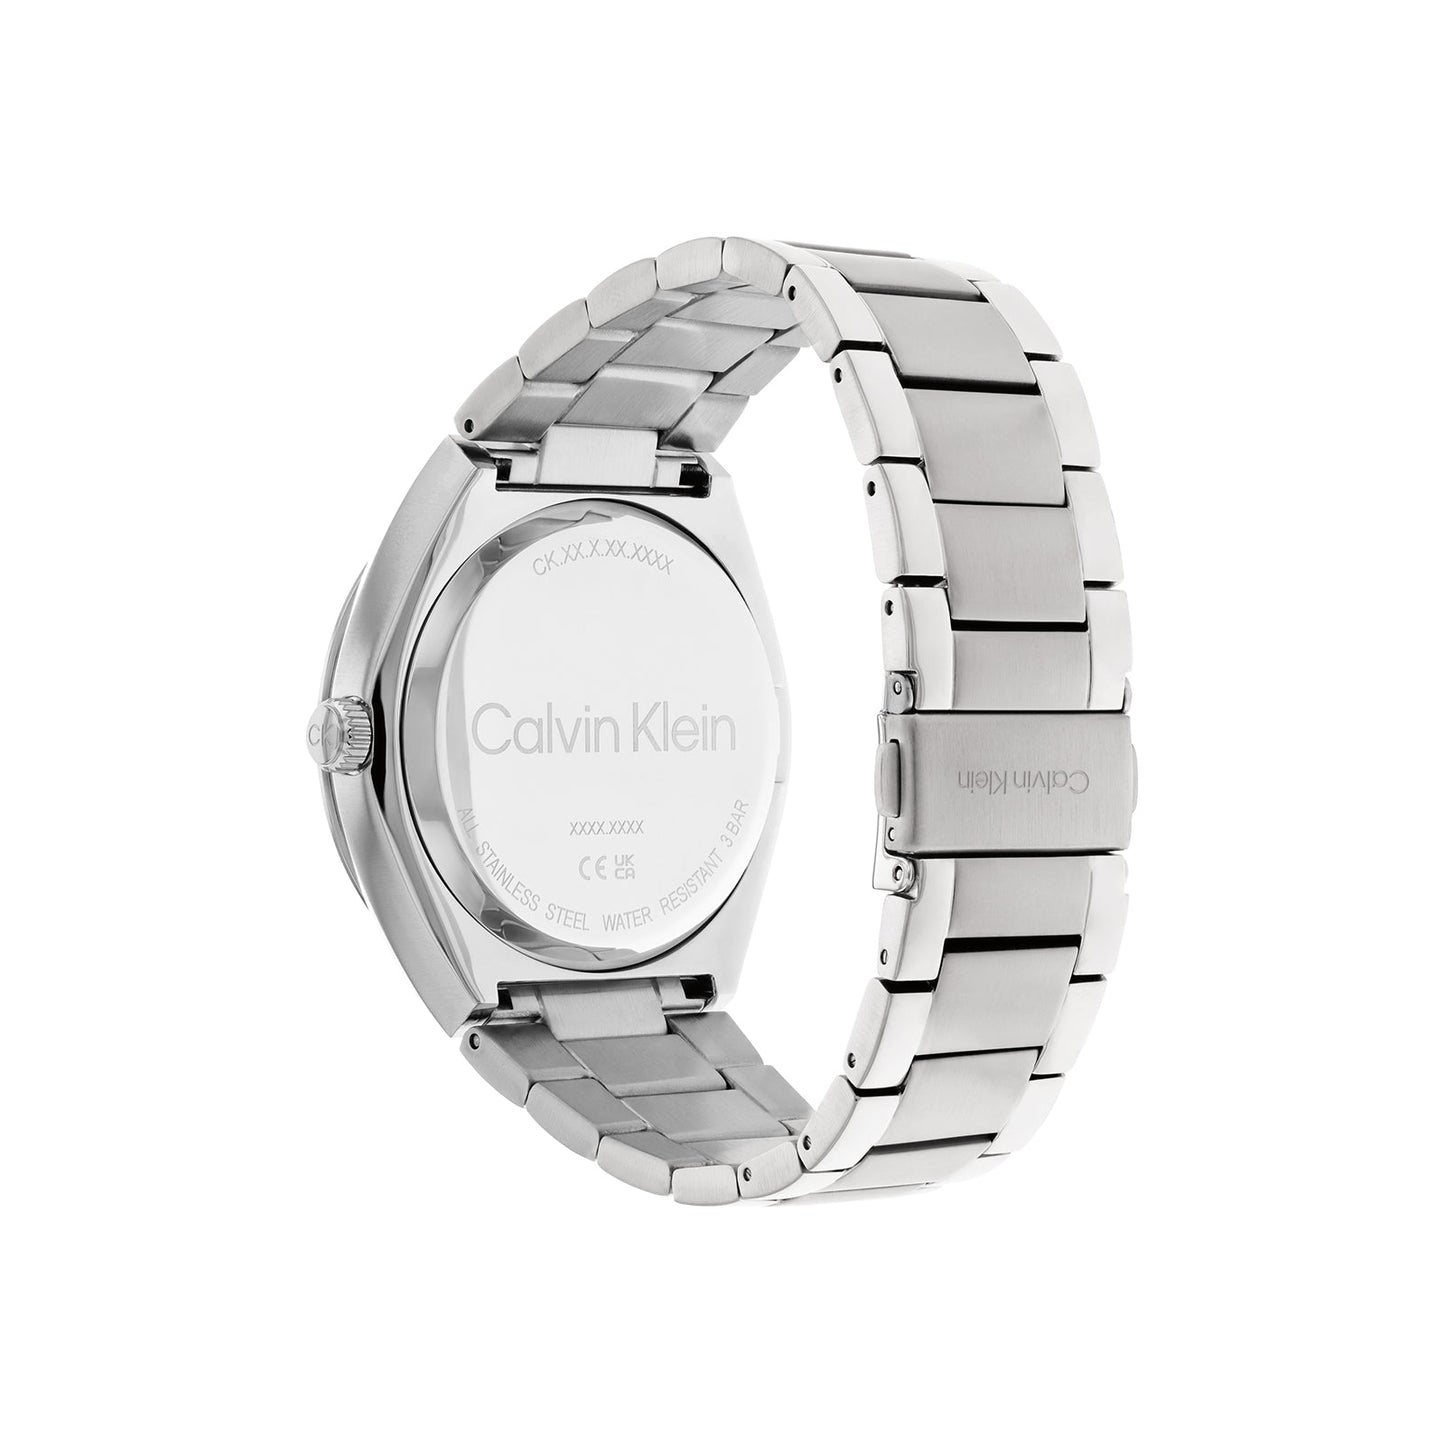 Calvin Klein 25200196 Men's Steel Watch